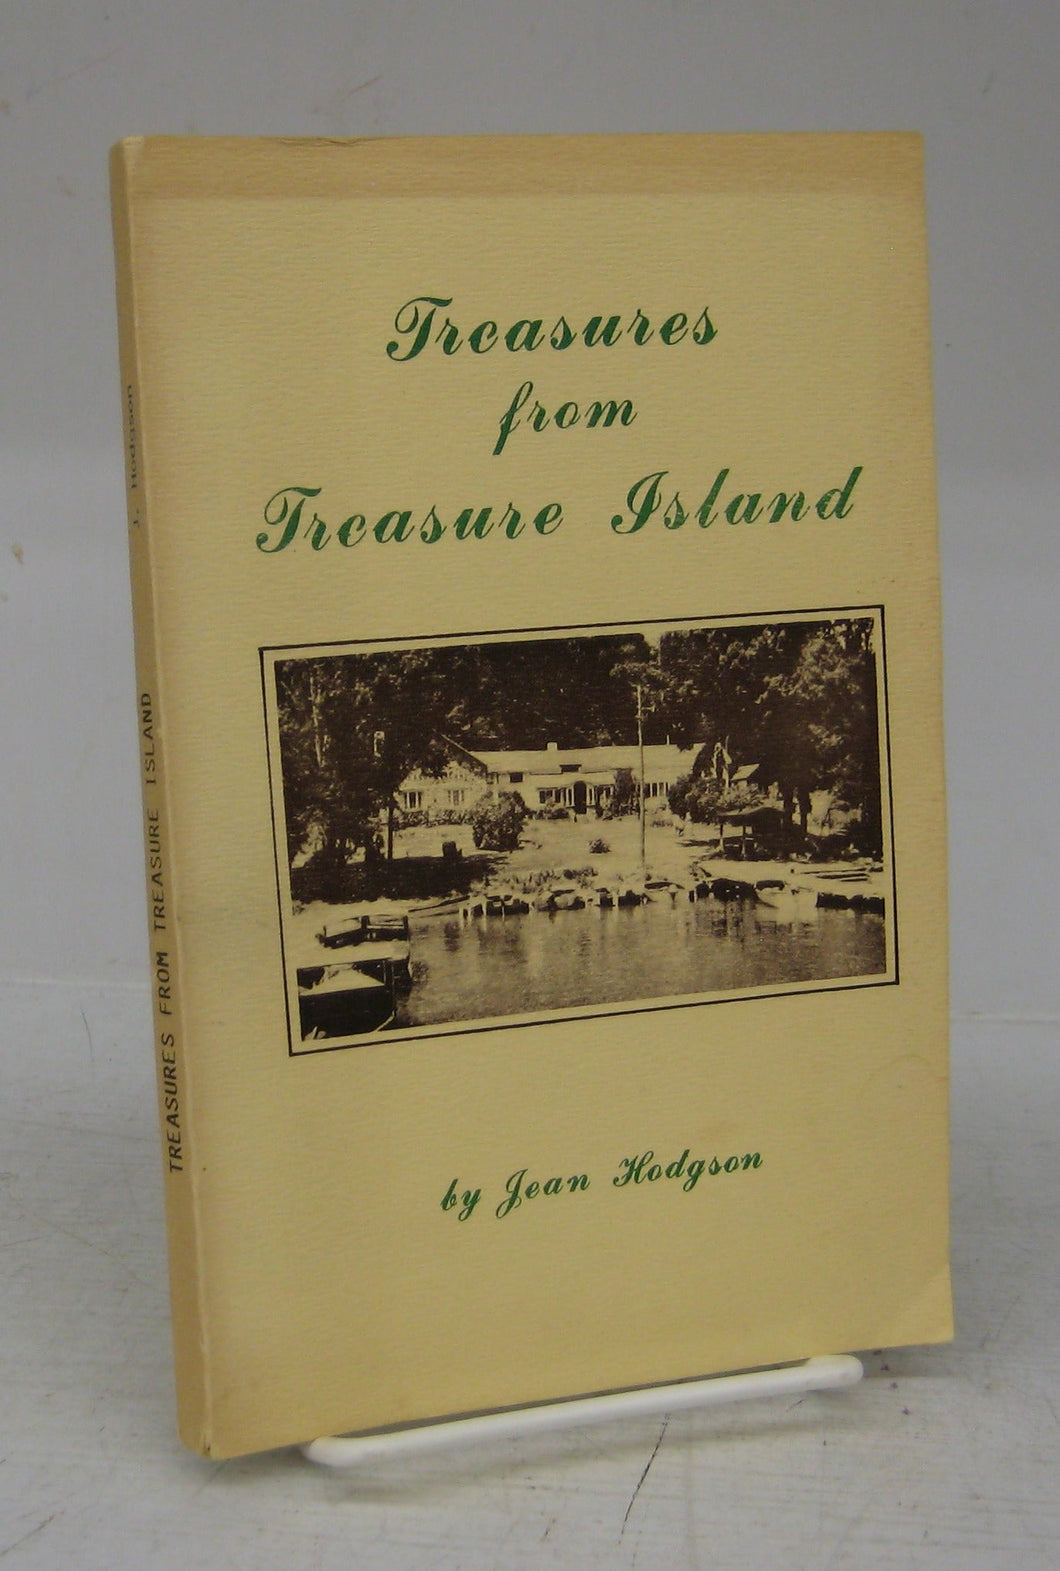 Treasures from Treasure Island